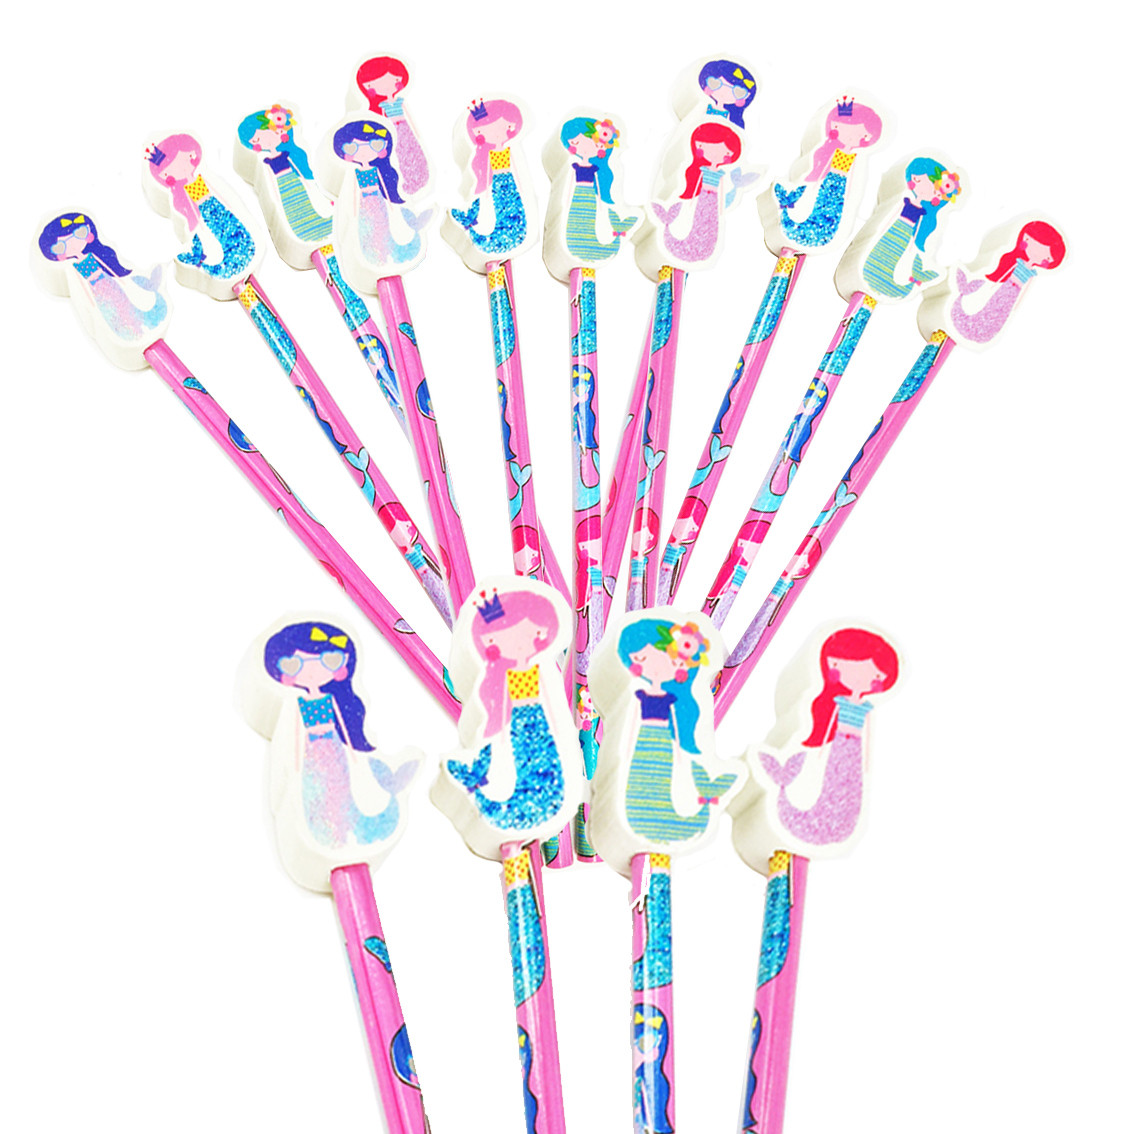 12 x Disney Princesses Stationery Set Pencils Eraser Sharpener Party Bags